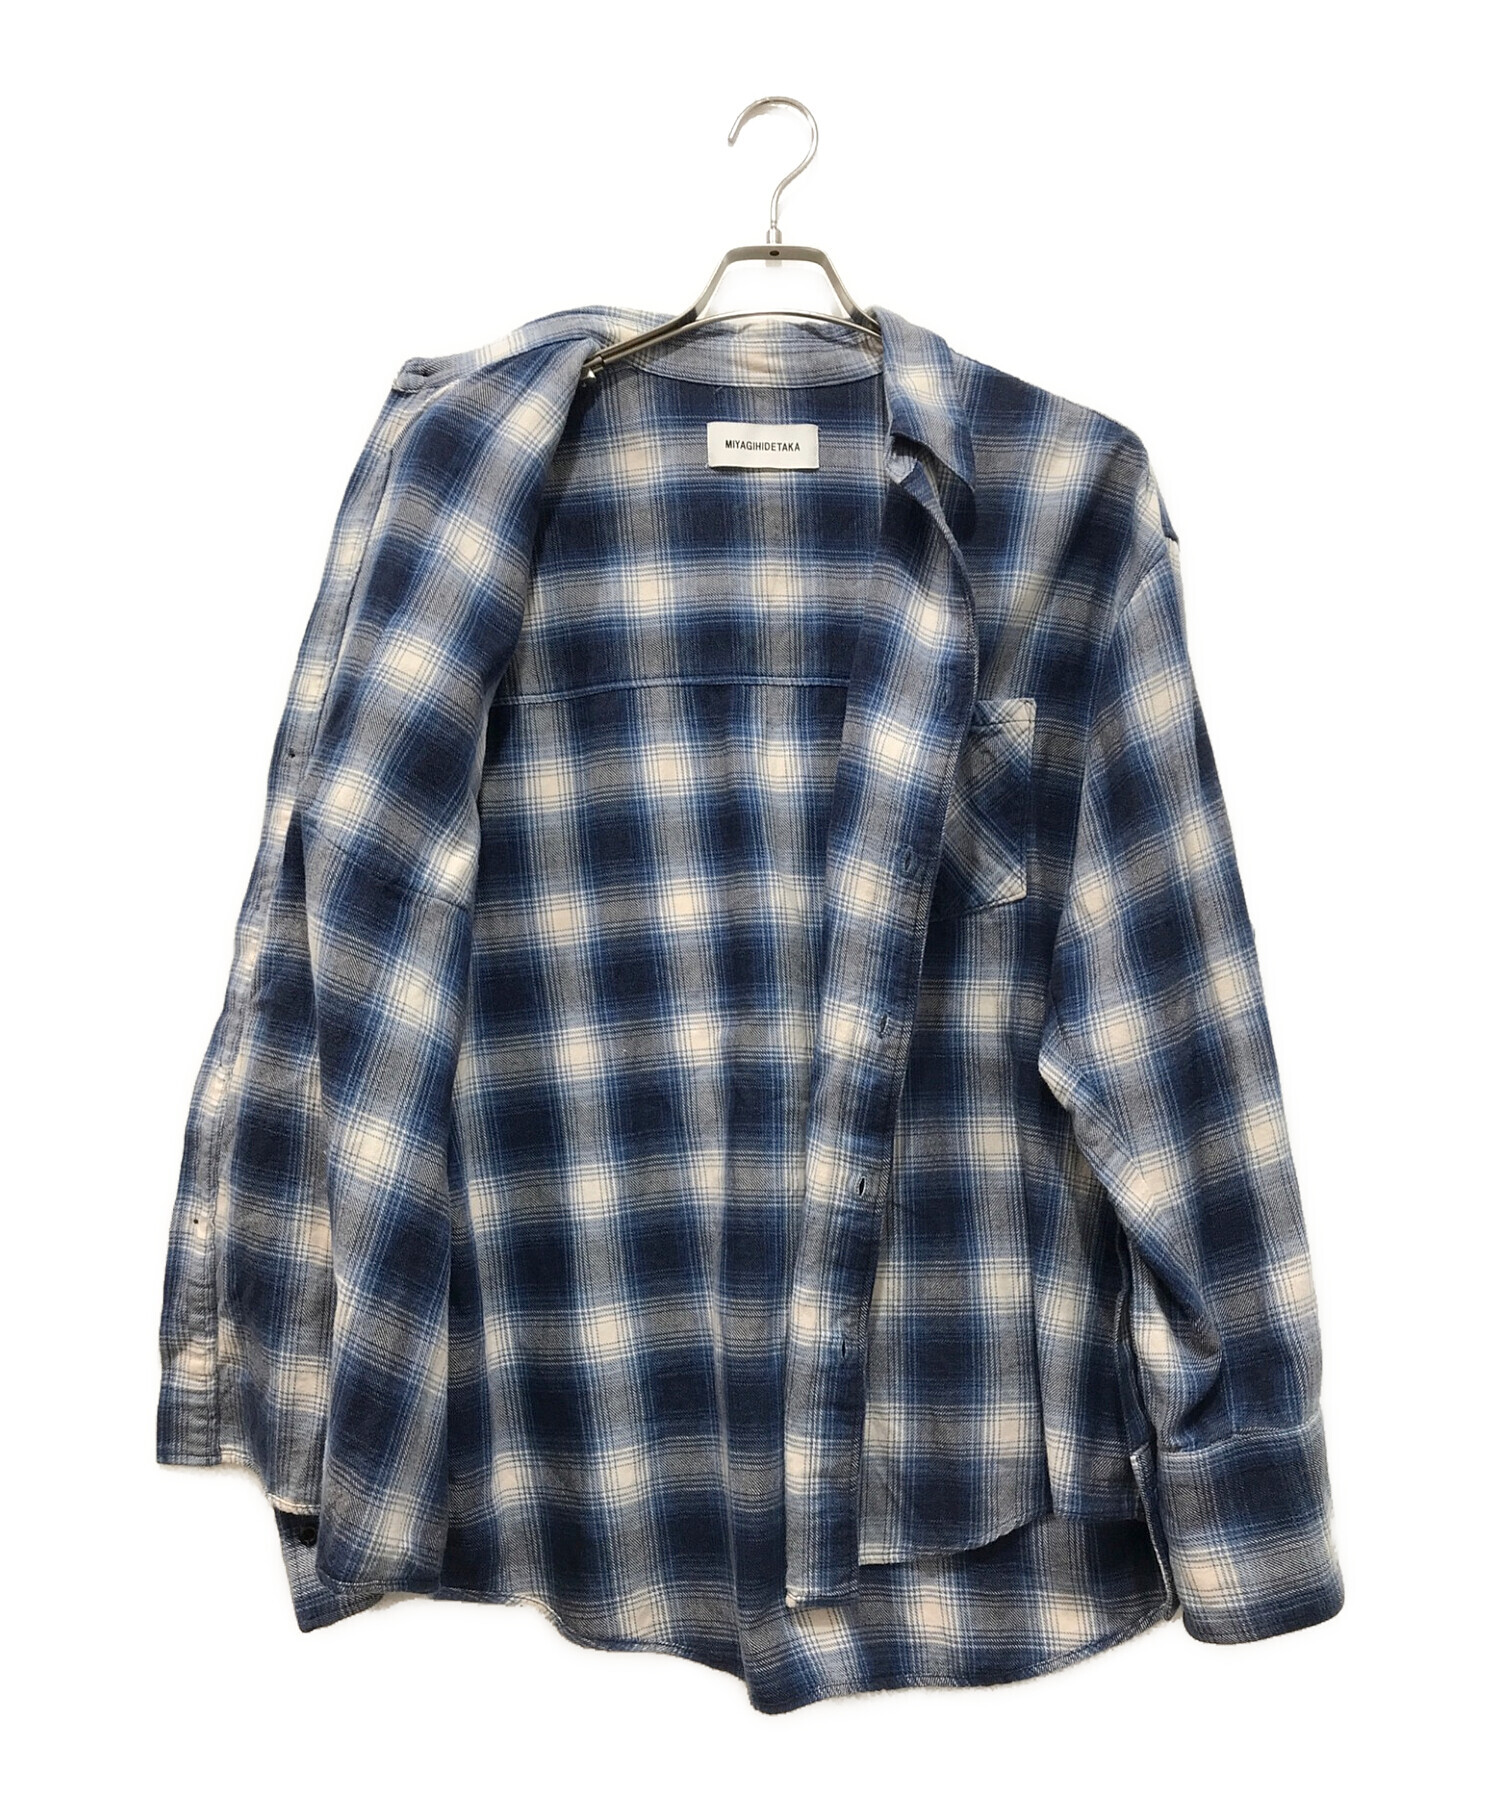 MIYAGIHIDETAKA (ミヤギヒデタカ) チェックネルシャツ ブルー×ホワイト サイズ:FREE